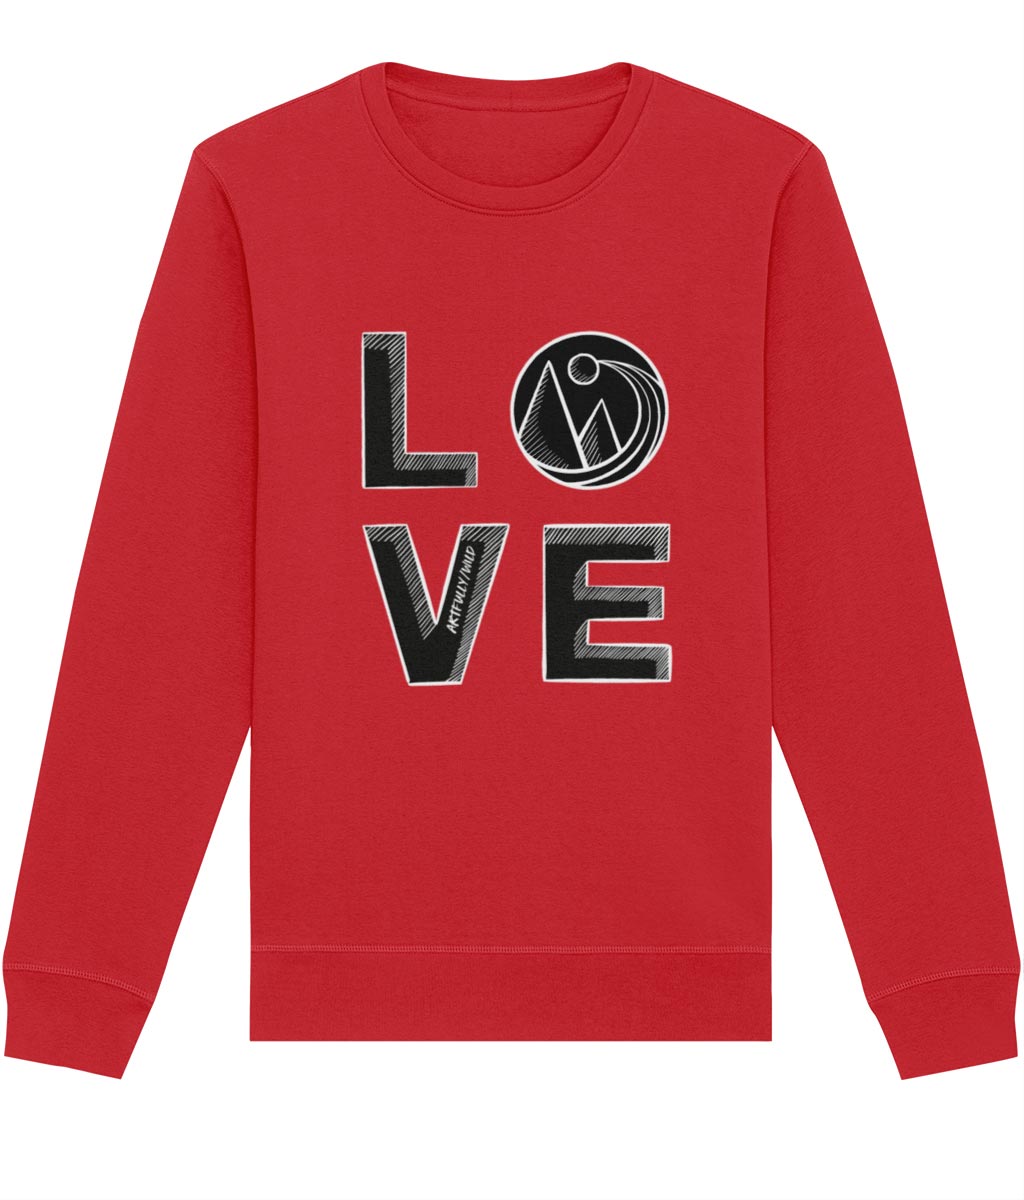 BIG LOVE Organic Red Crew Neck Sweatshirt. Eco-friendly Clothing. Unisex/Women/Men. Illustration Icon by Artfully/Wild UK.